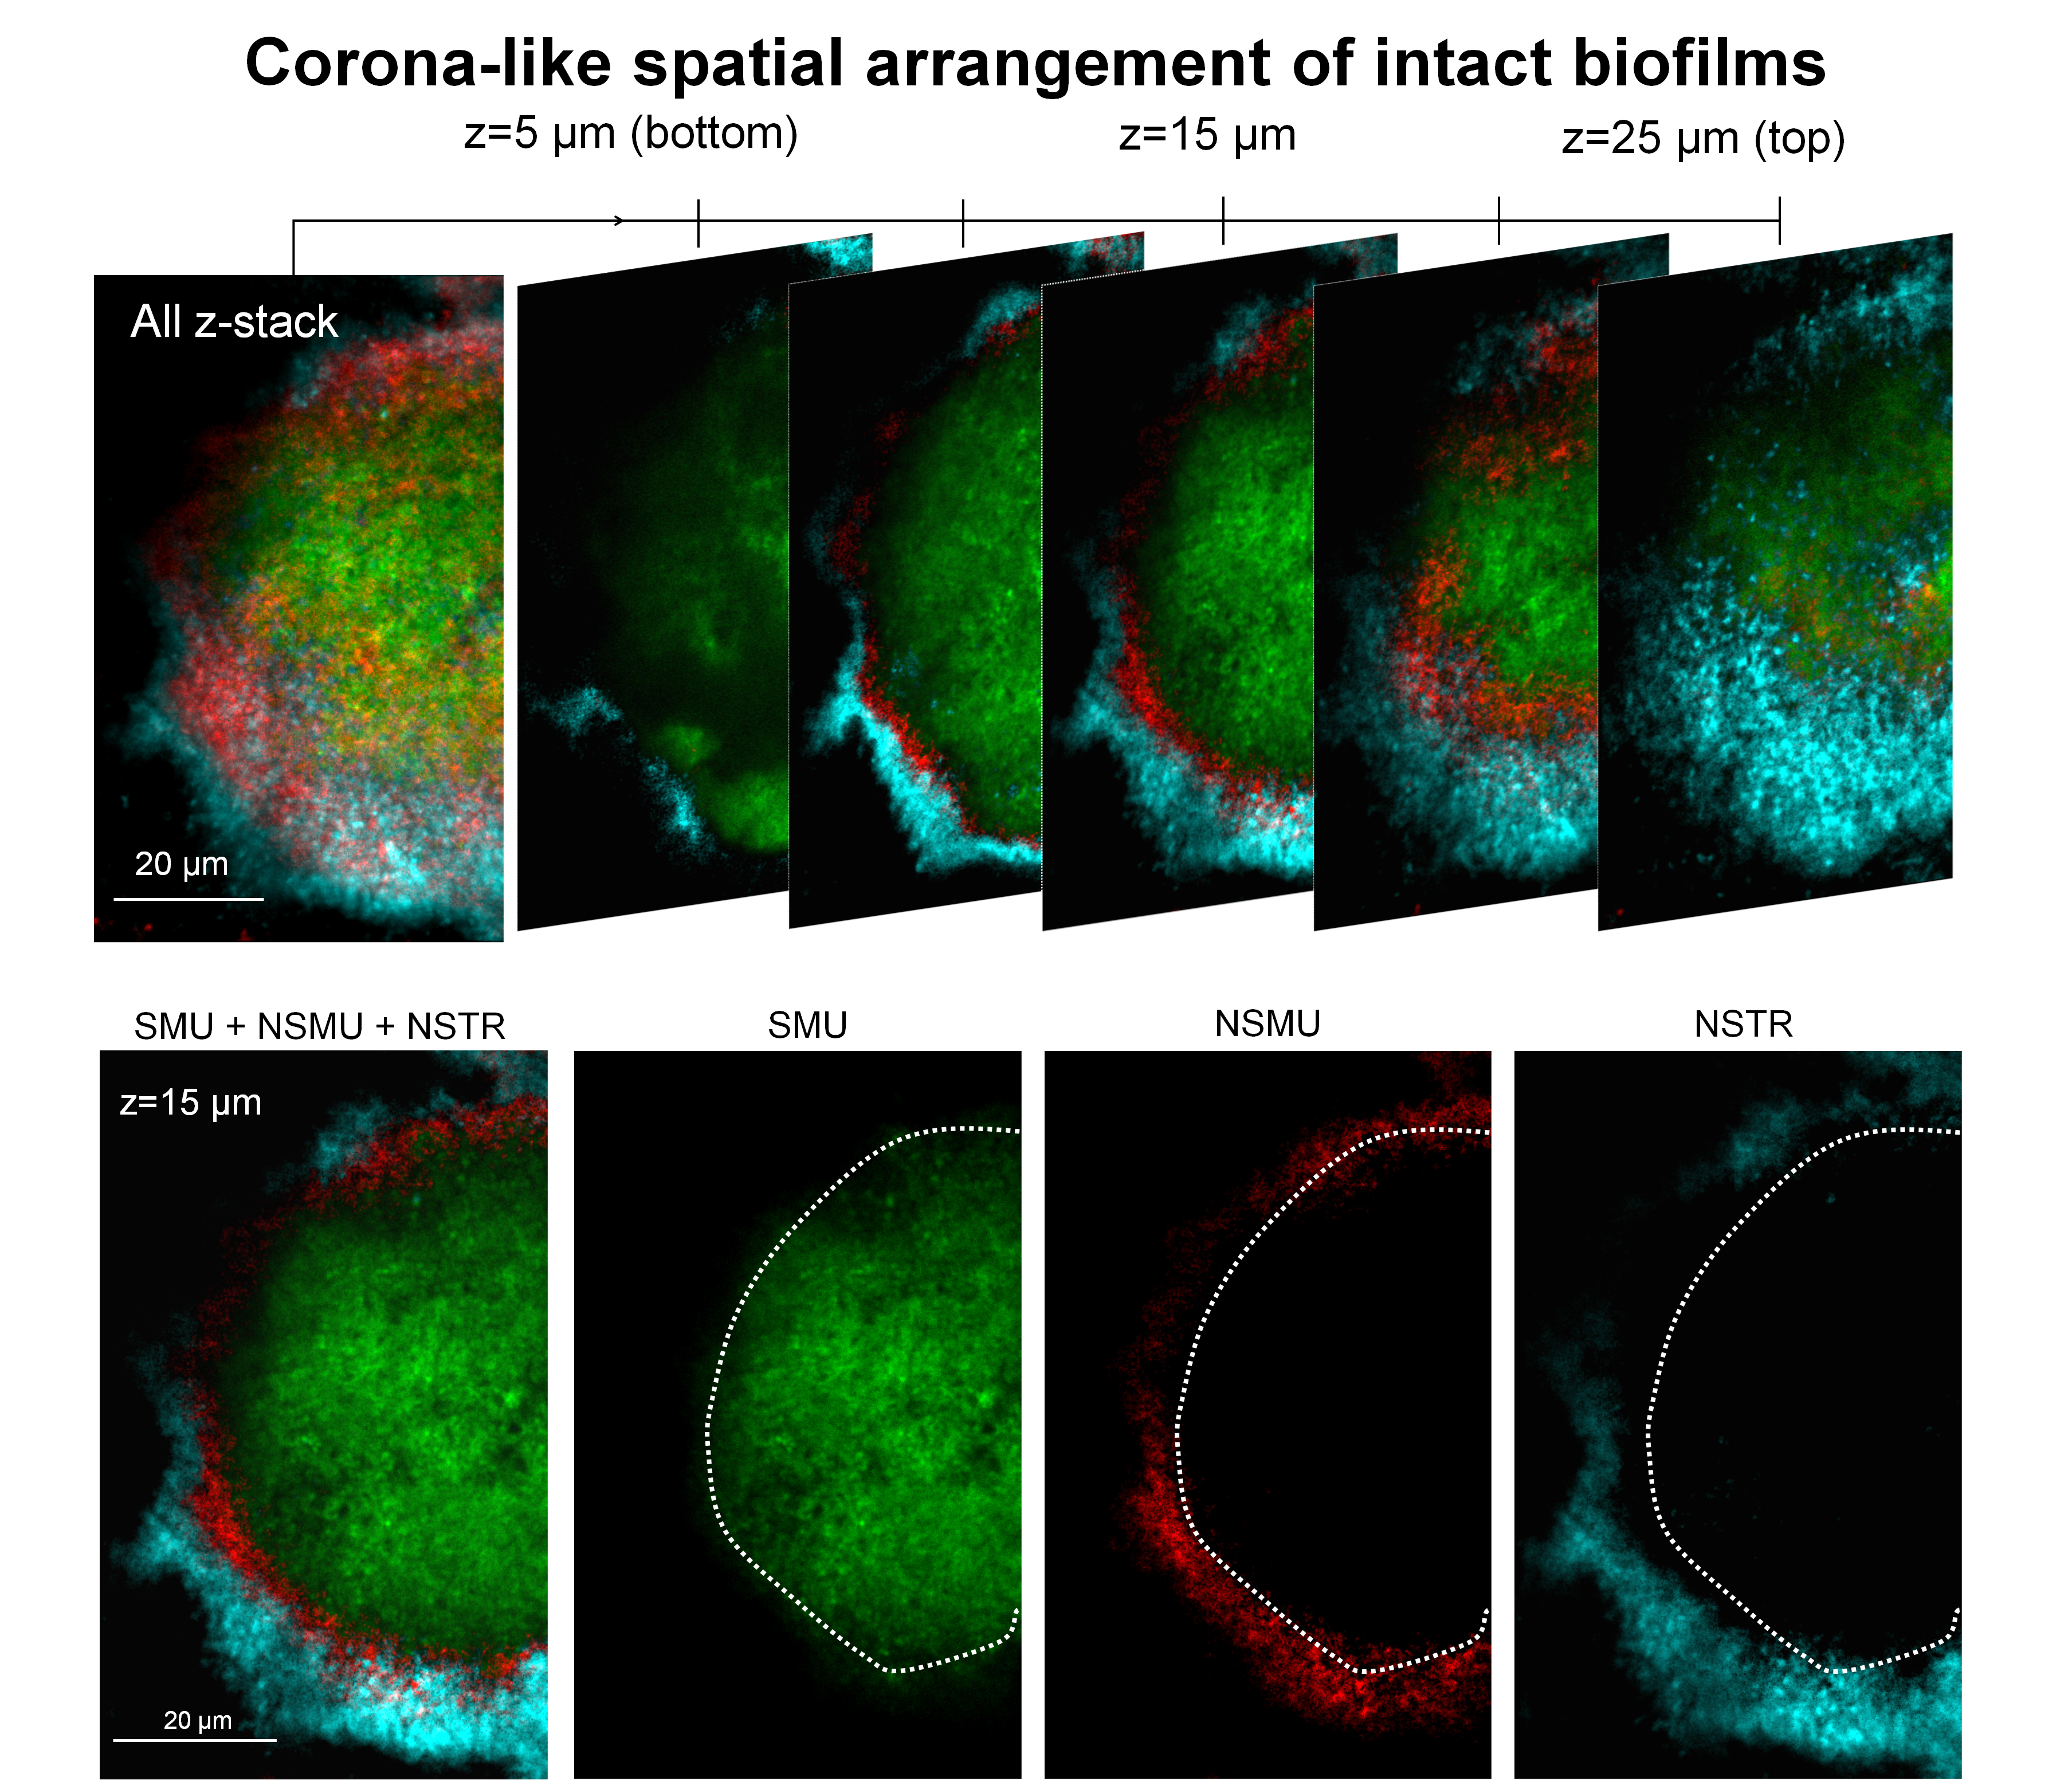 Corona-like spatial arrangement of intact biofilms